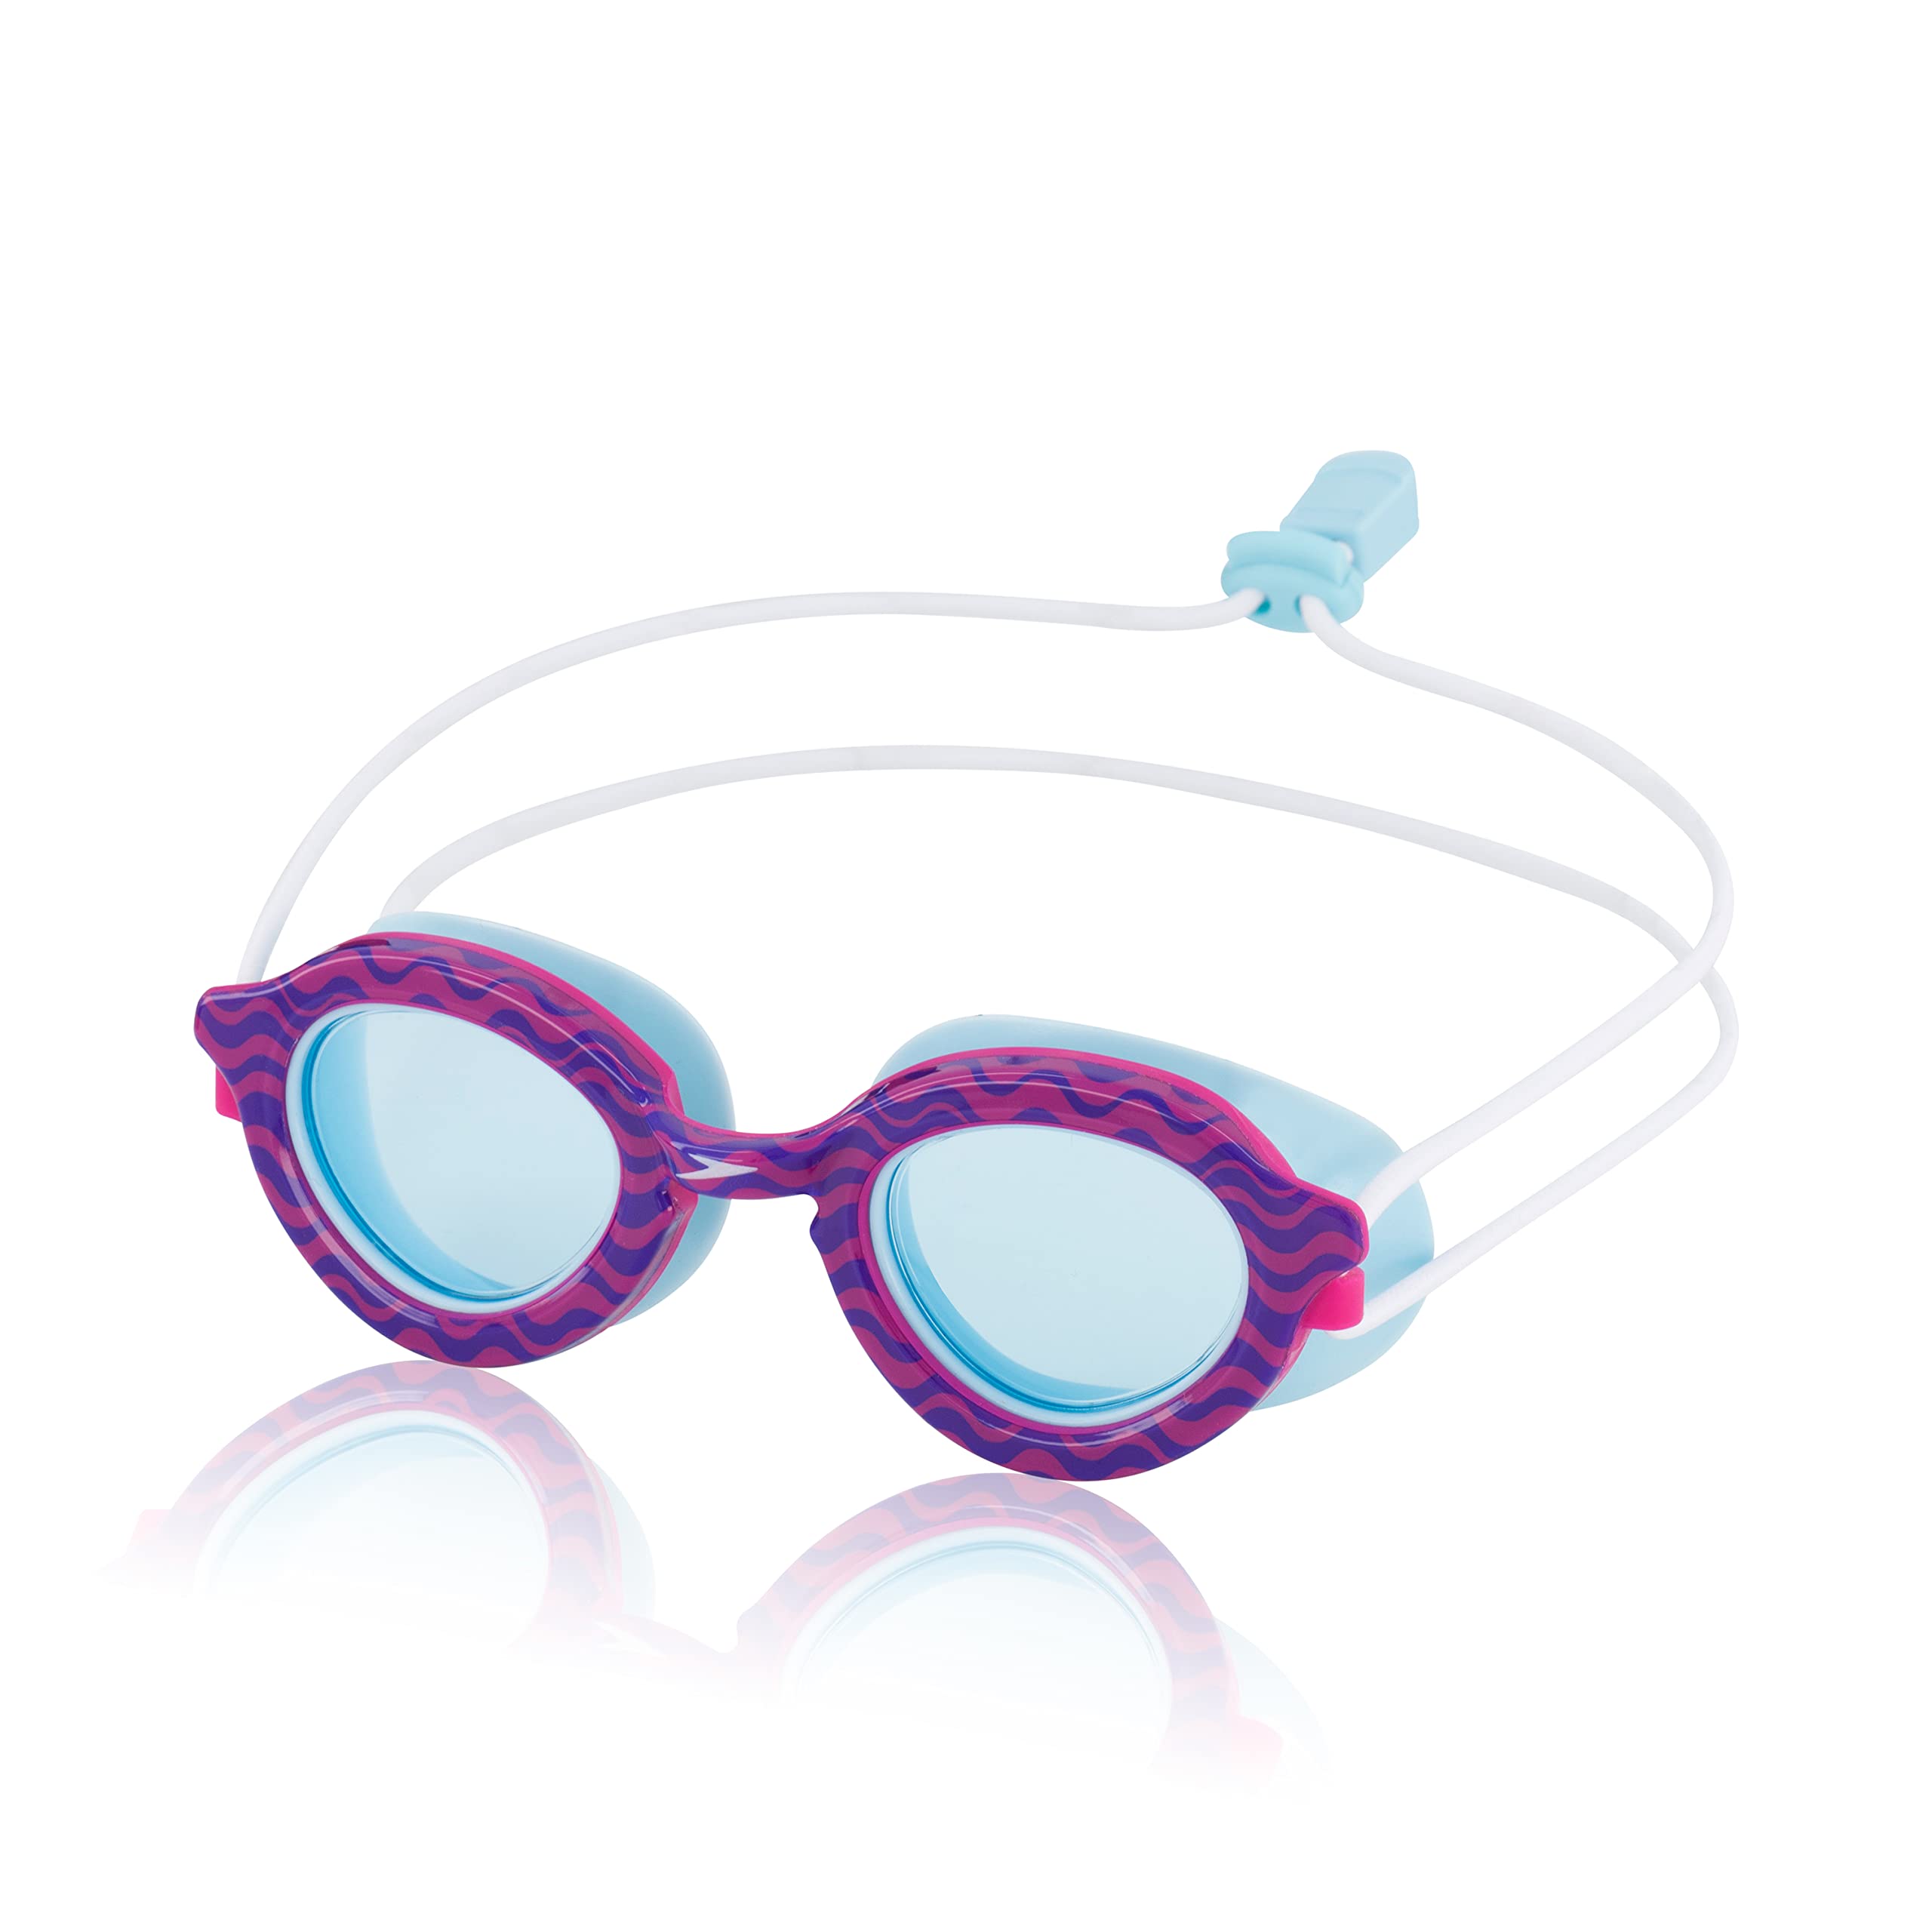 Speedo Unisex-Child Swim Goggles Sunny G Ages 3-8, Purple Pinkceleste